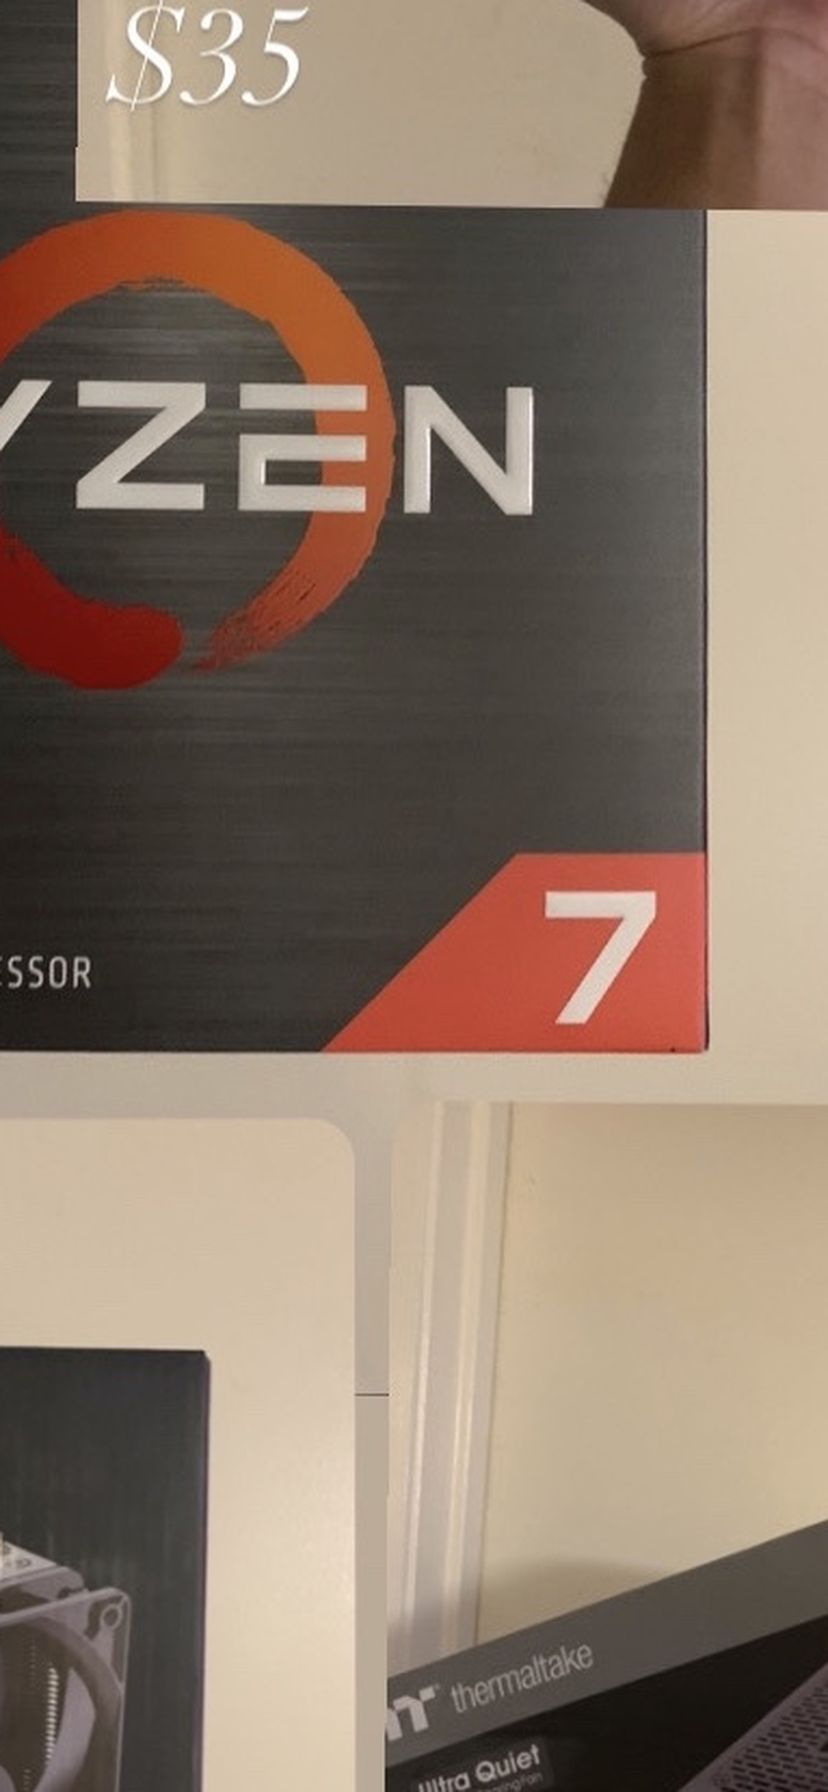 AMD RYZEN COOL MASTER PC PARTS